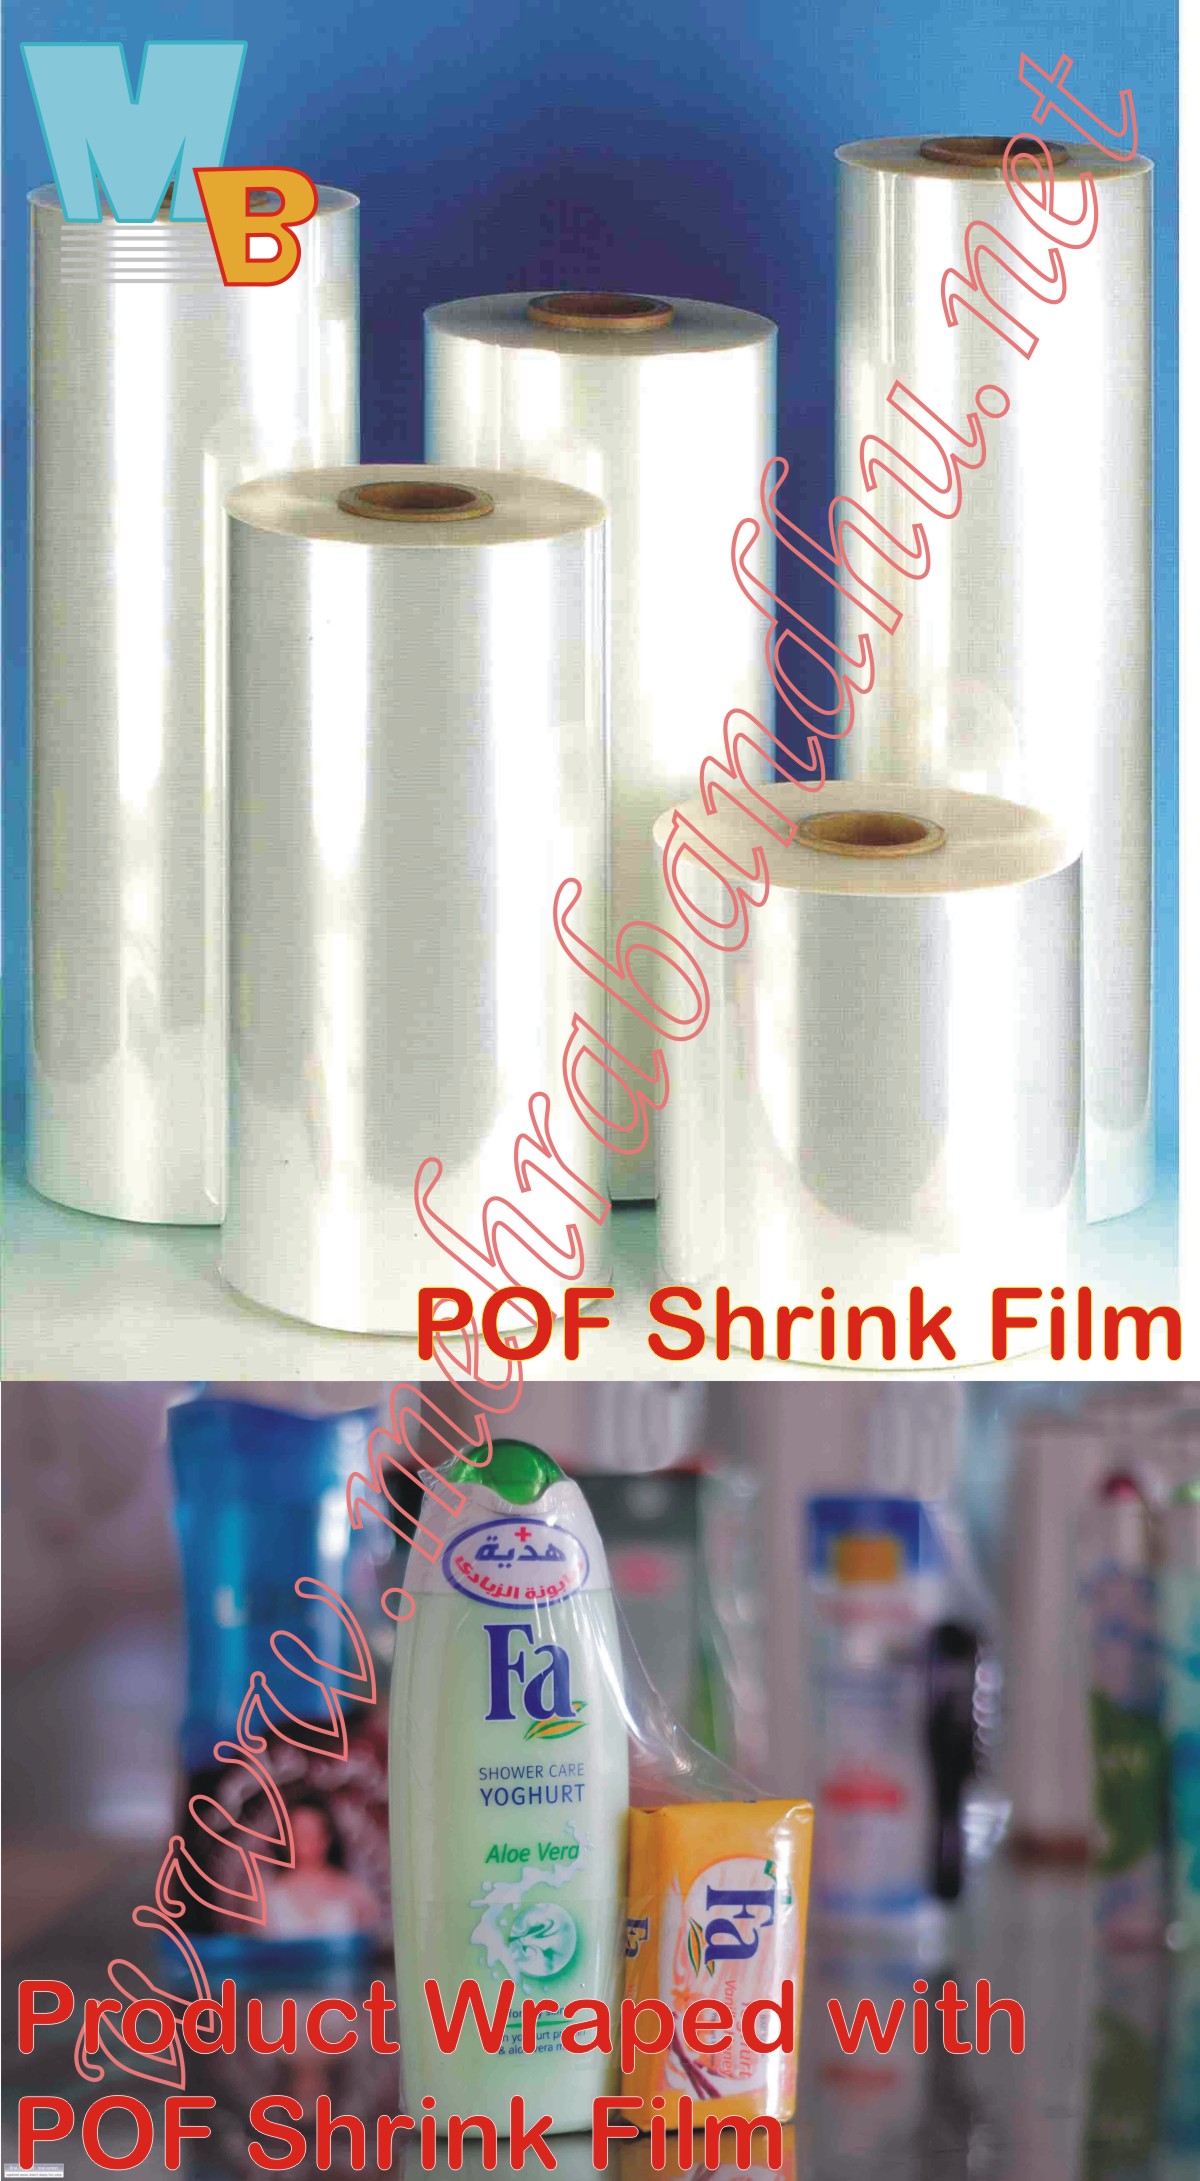 Manufacturers Exporters and Wholesale Suppliers of POF Shrink Film Varanasi Uttar Pradesh